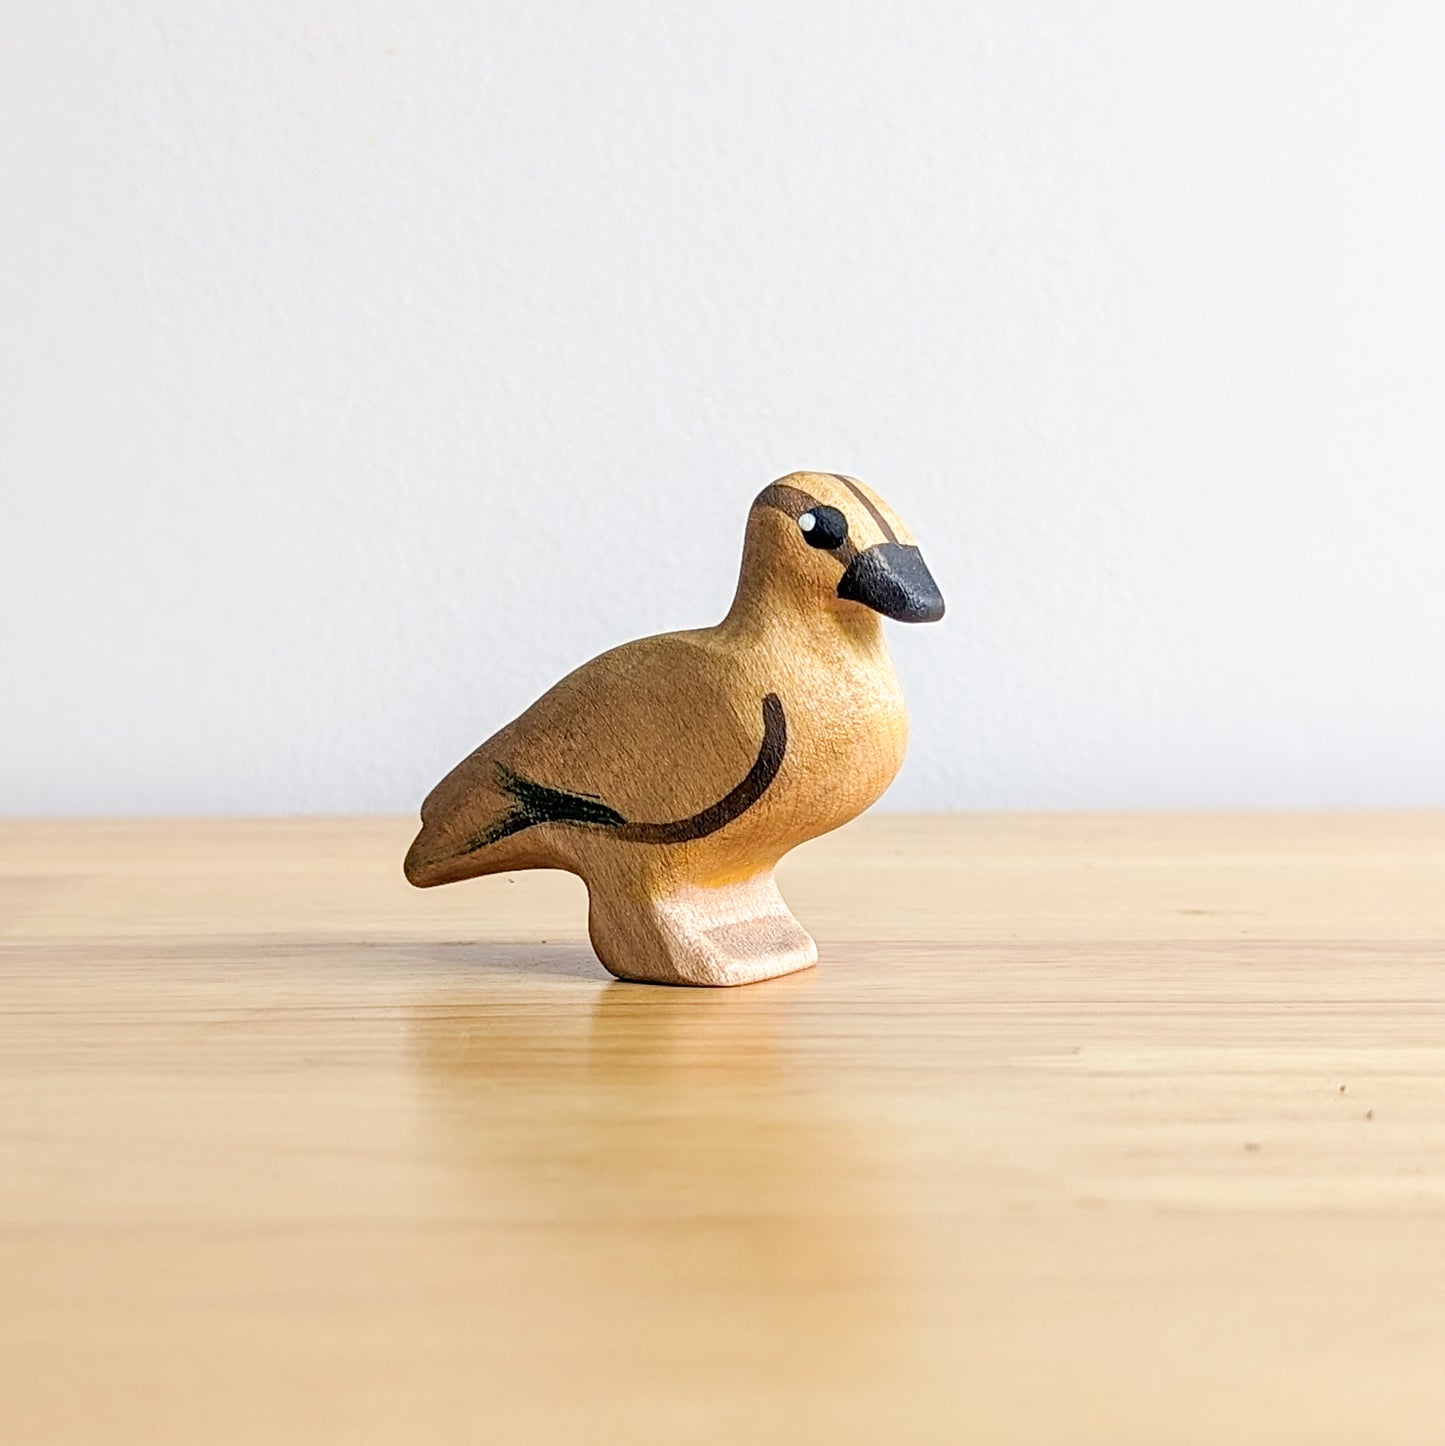 Australian Duck Wooden Toy